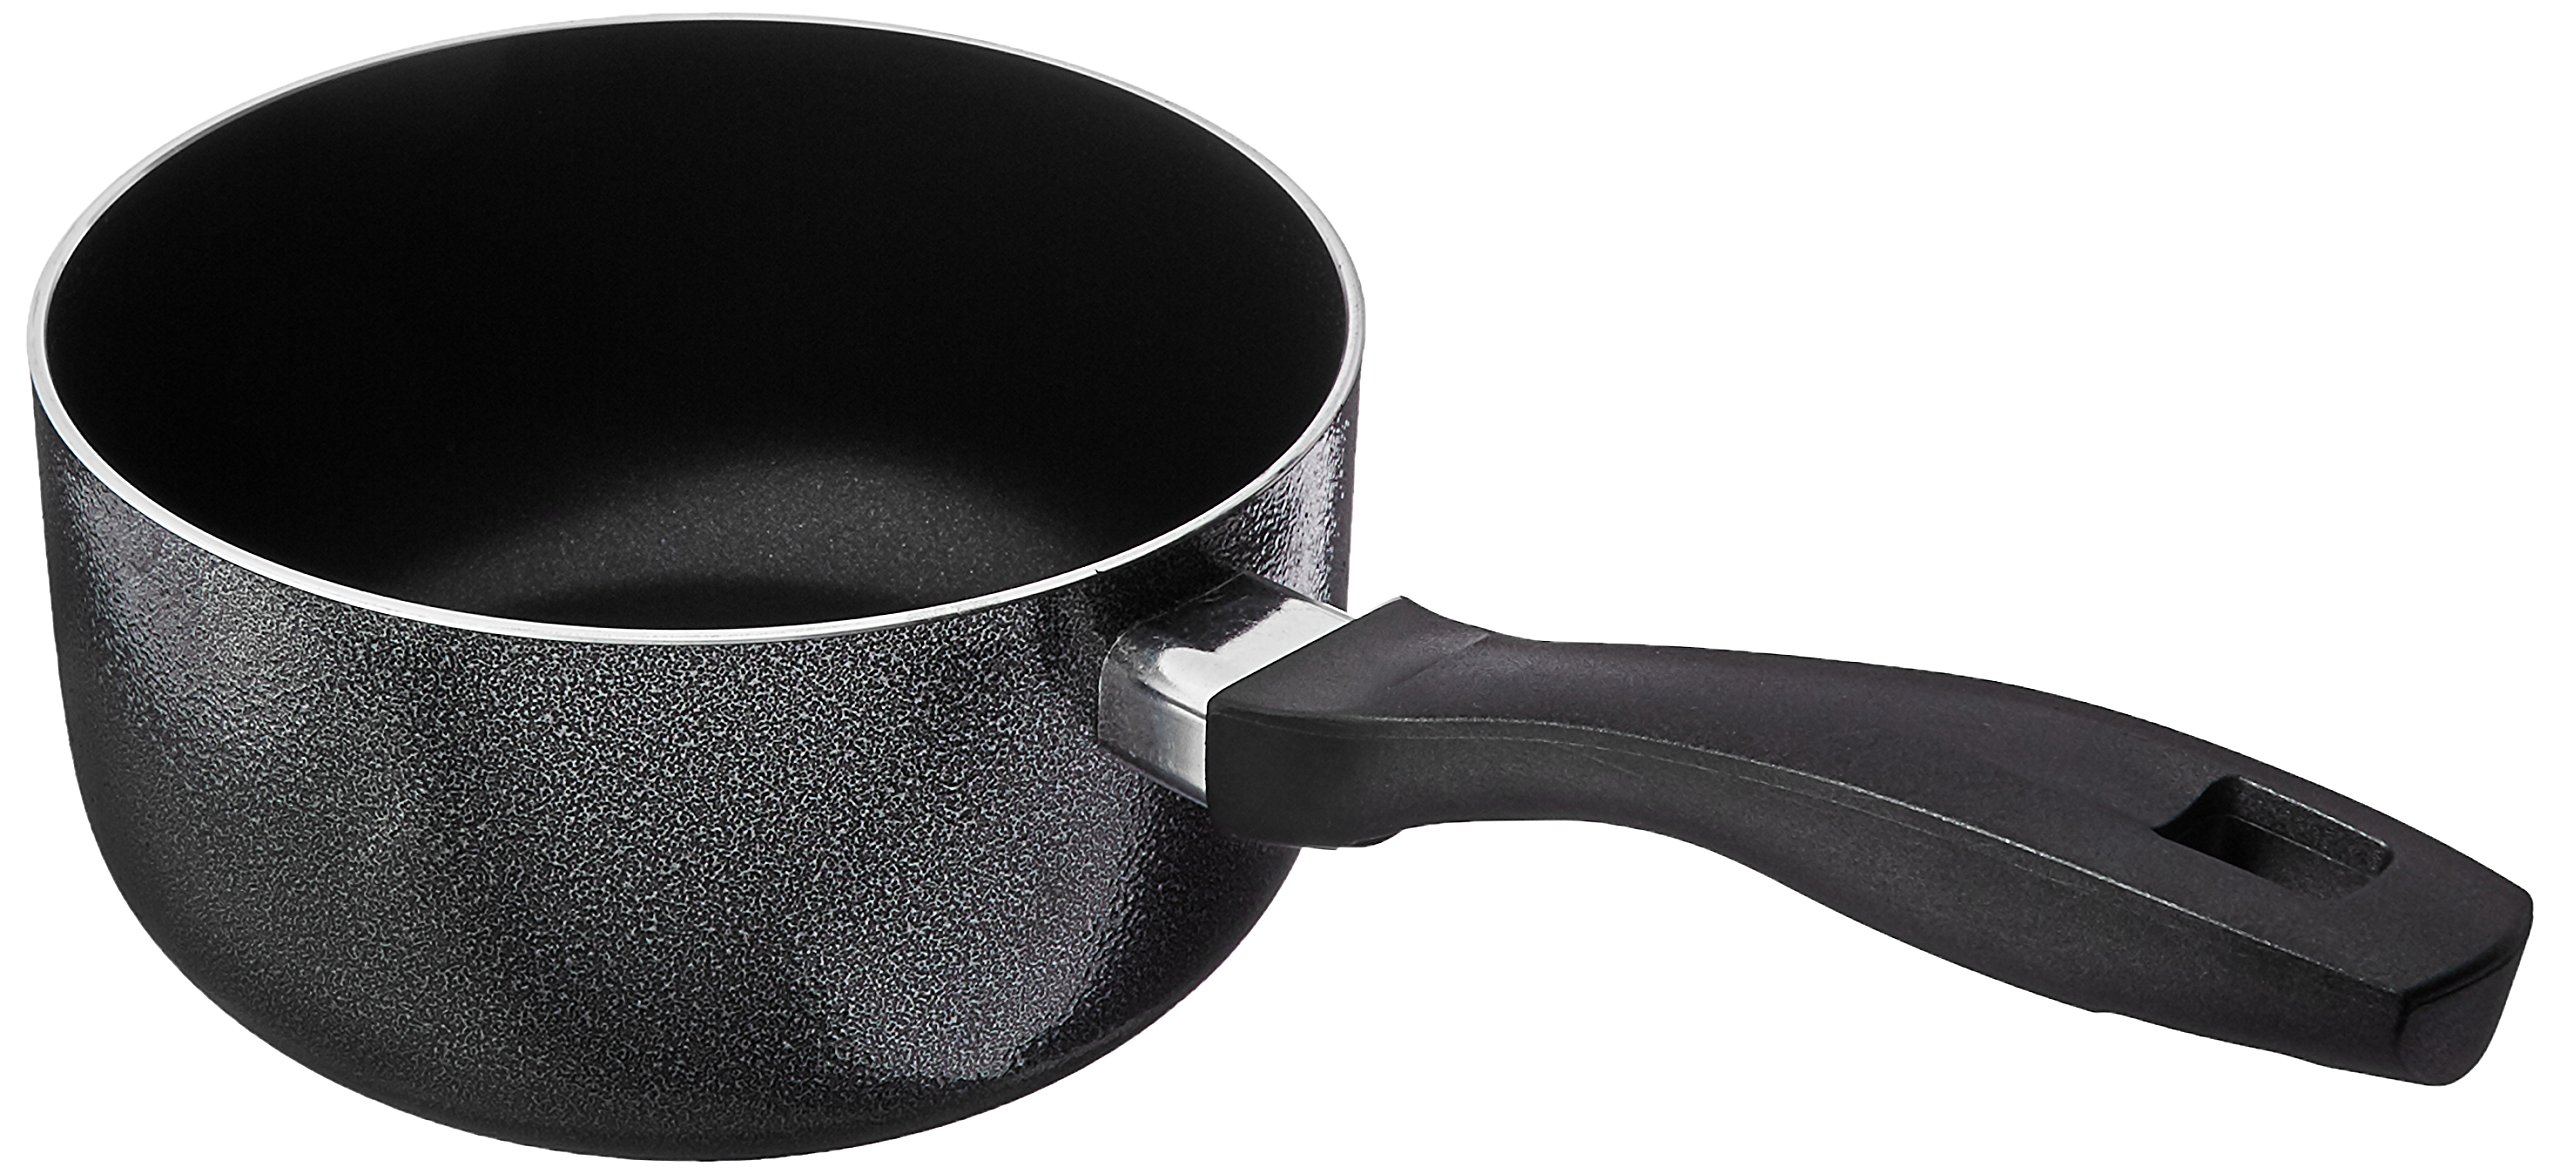 Oster Calirborne Aluminum Non Stick Sauce Pan with Lid, 2.5 Quart, Black